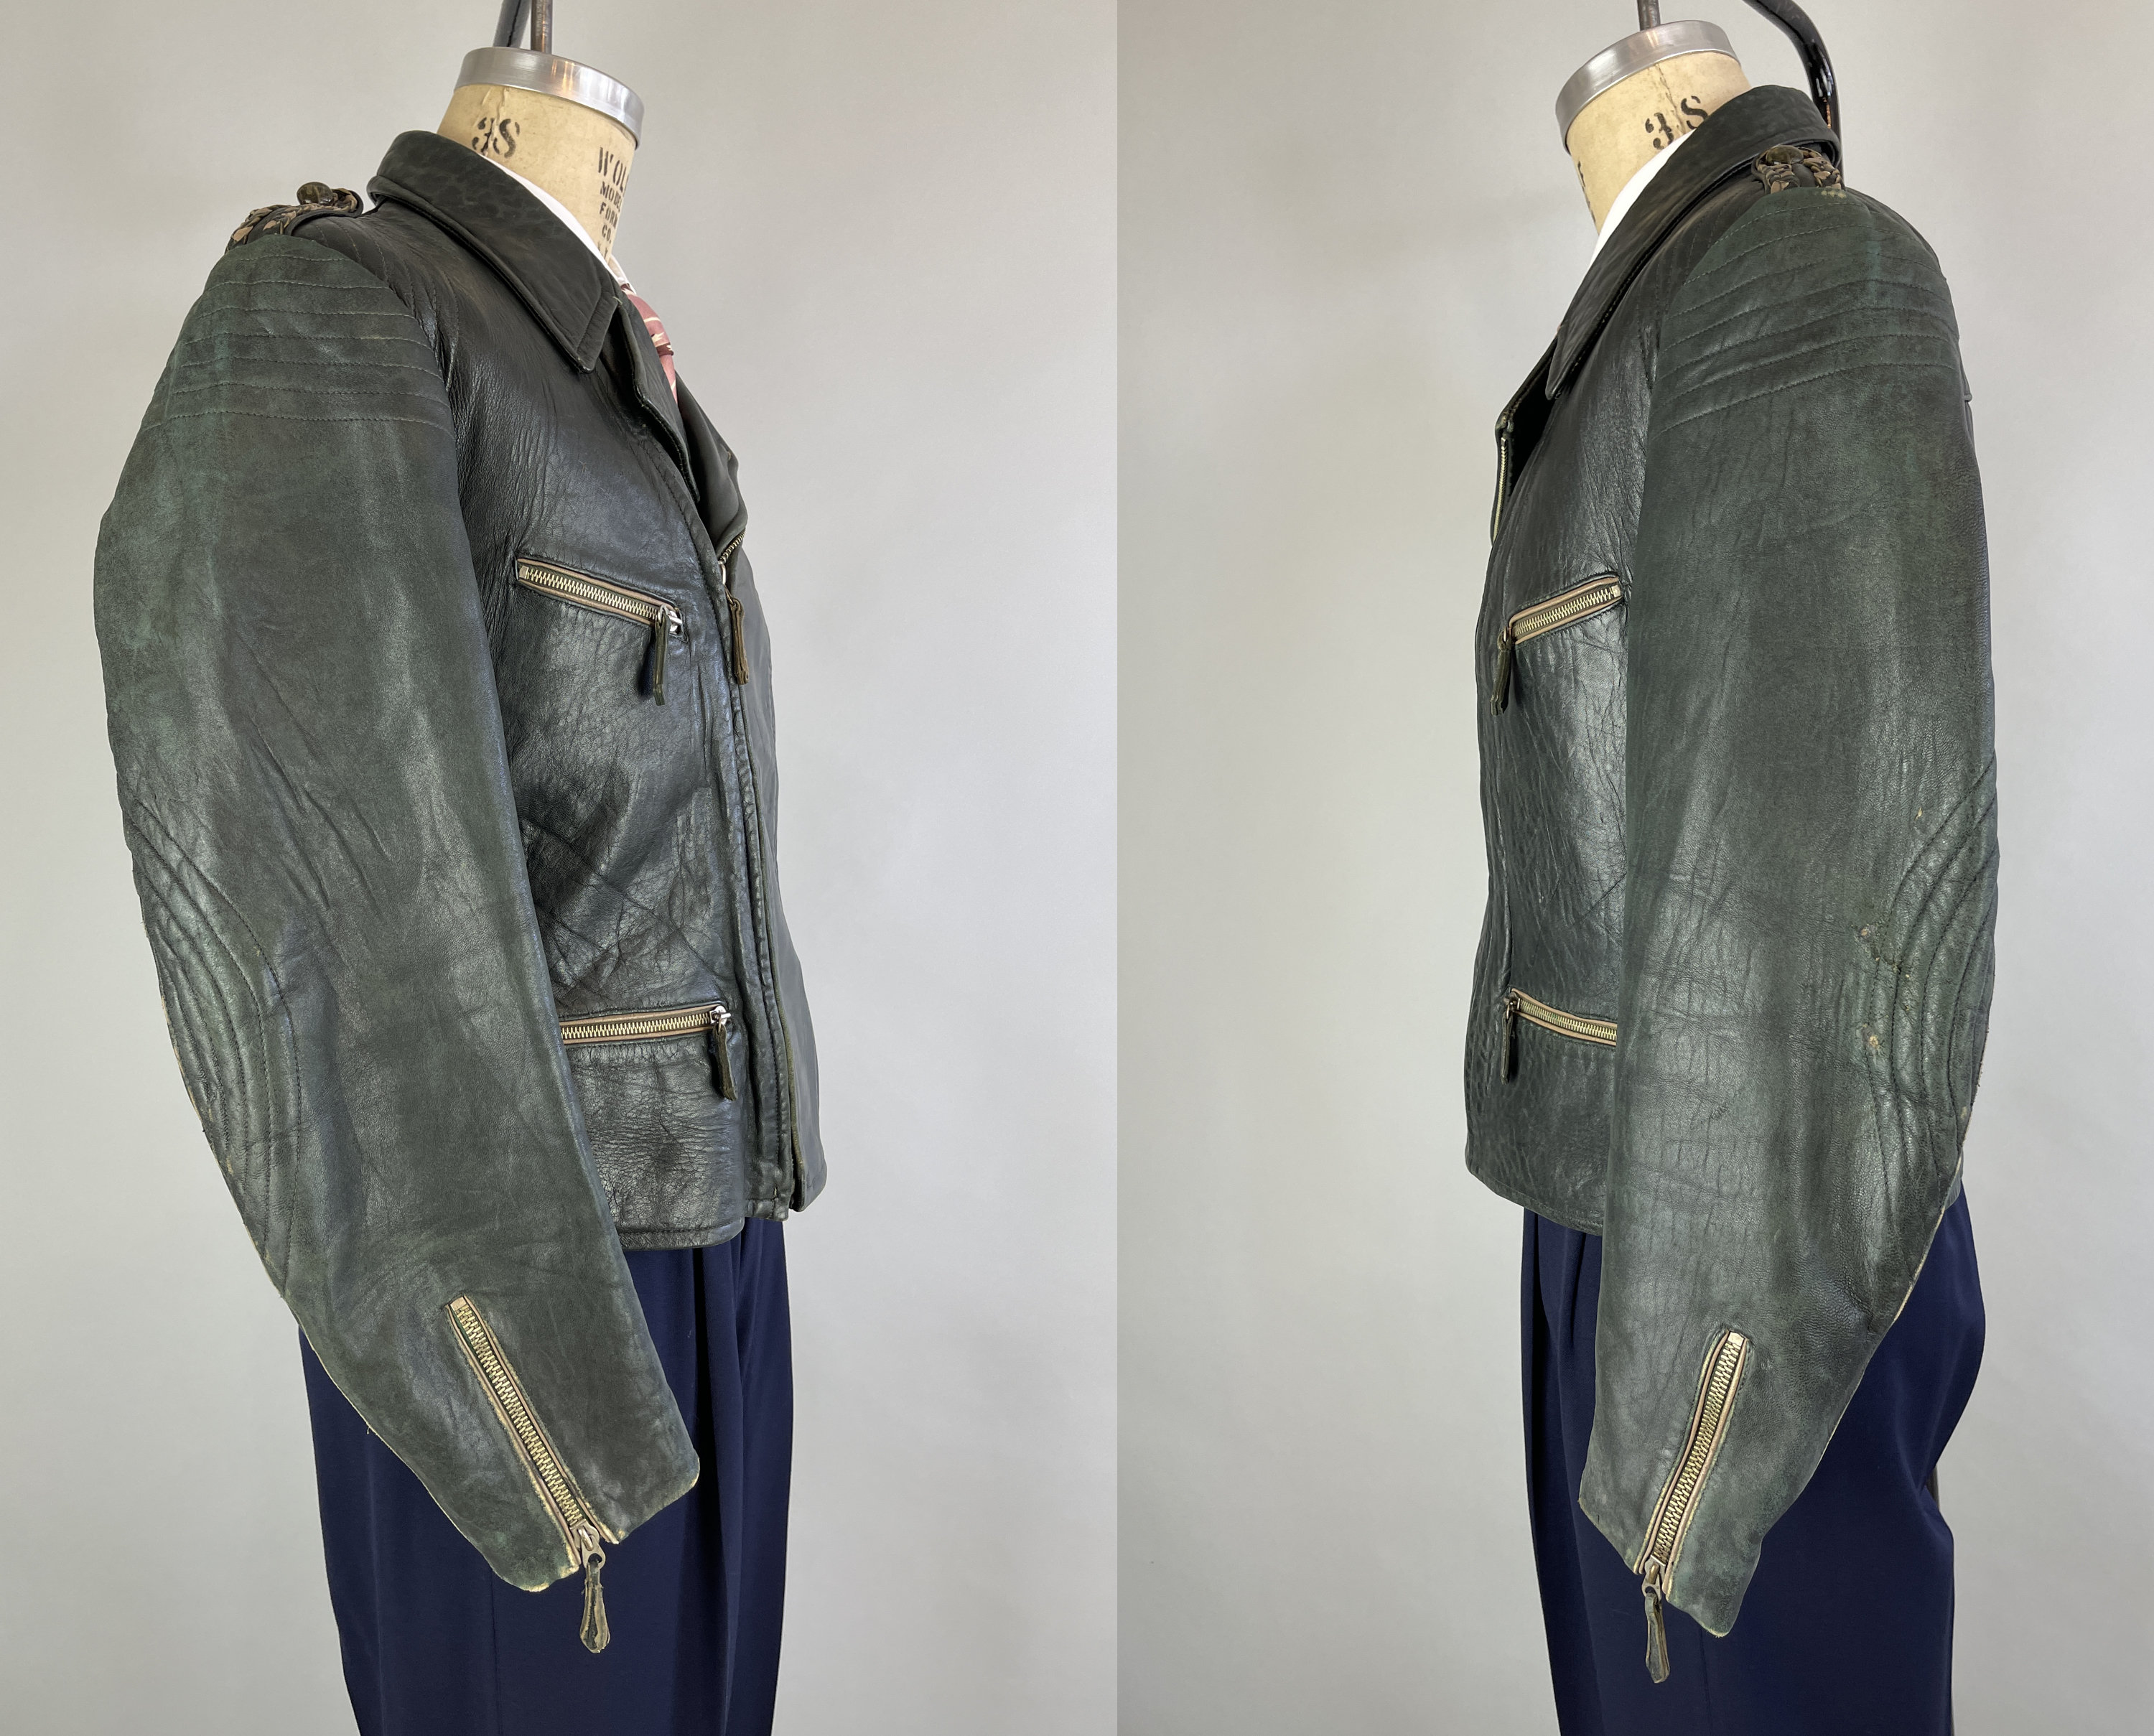 Etsy Jacket Back Belted Delinquent Flannel 1930s 30s Leather Black Jacket - Vintage Lining Dandy Large & Deco W/ zipp Motorcycle Art Hardware